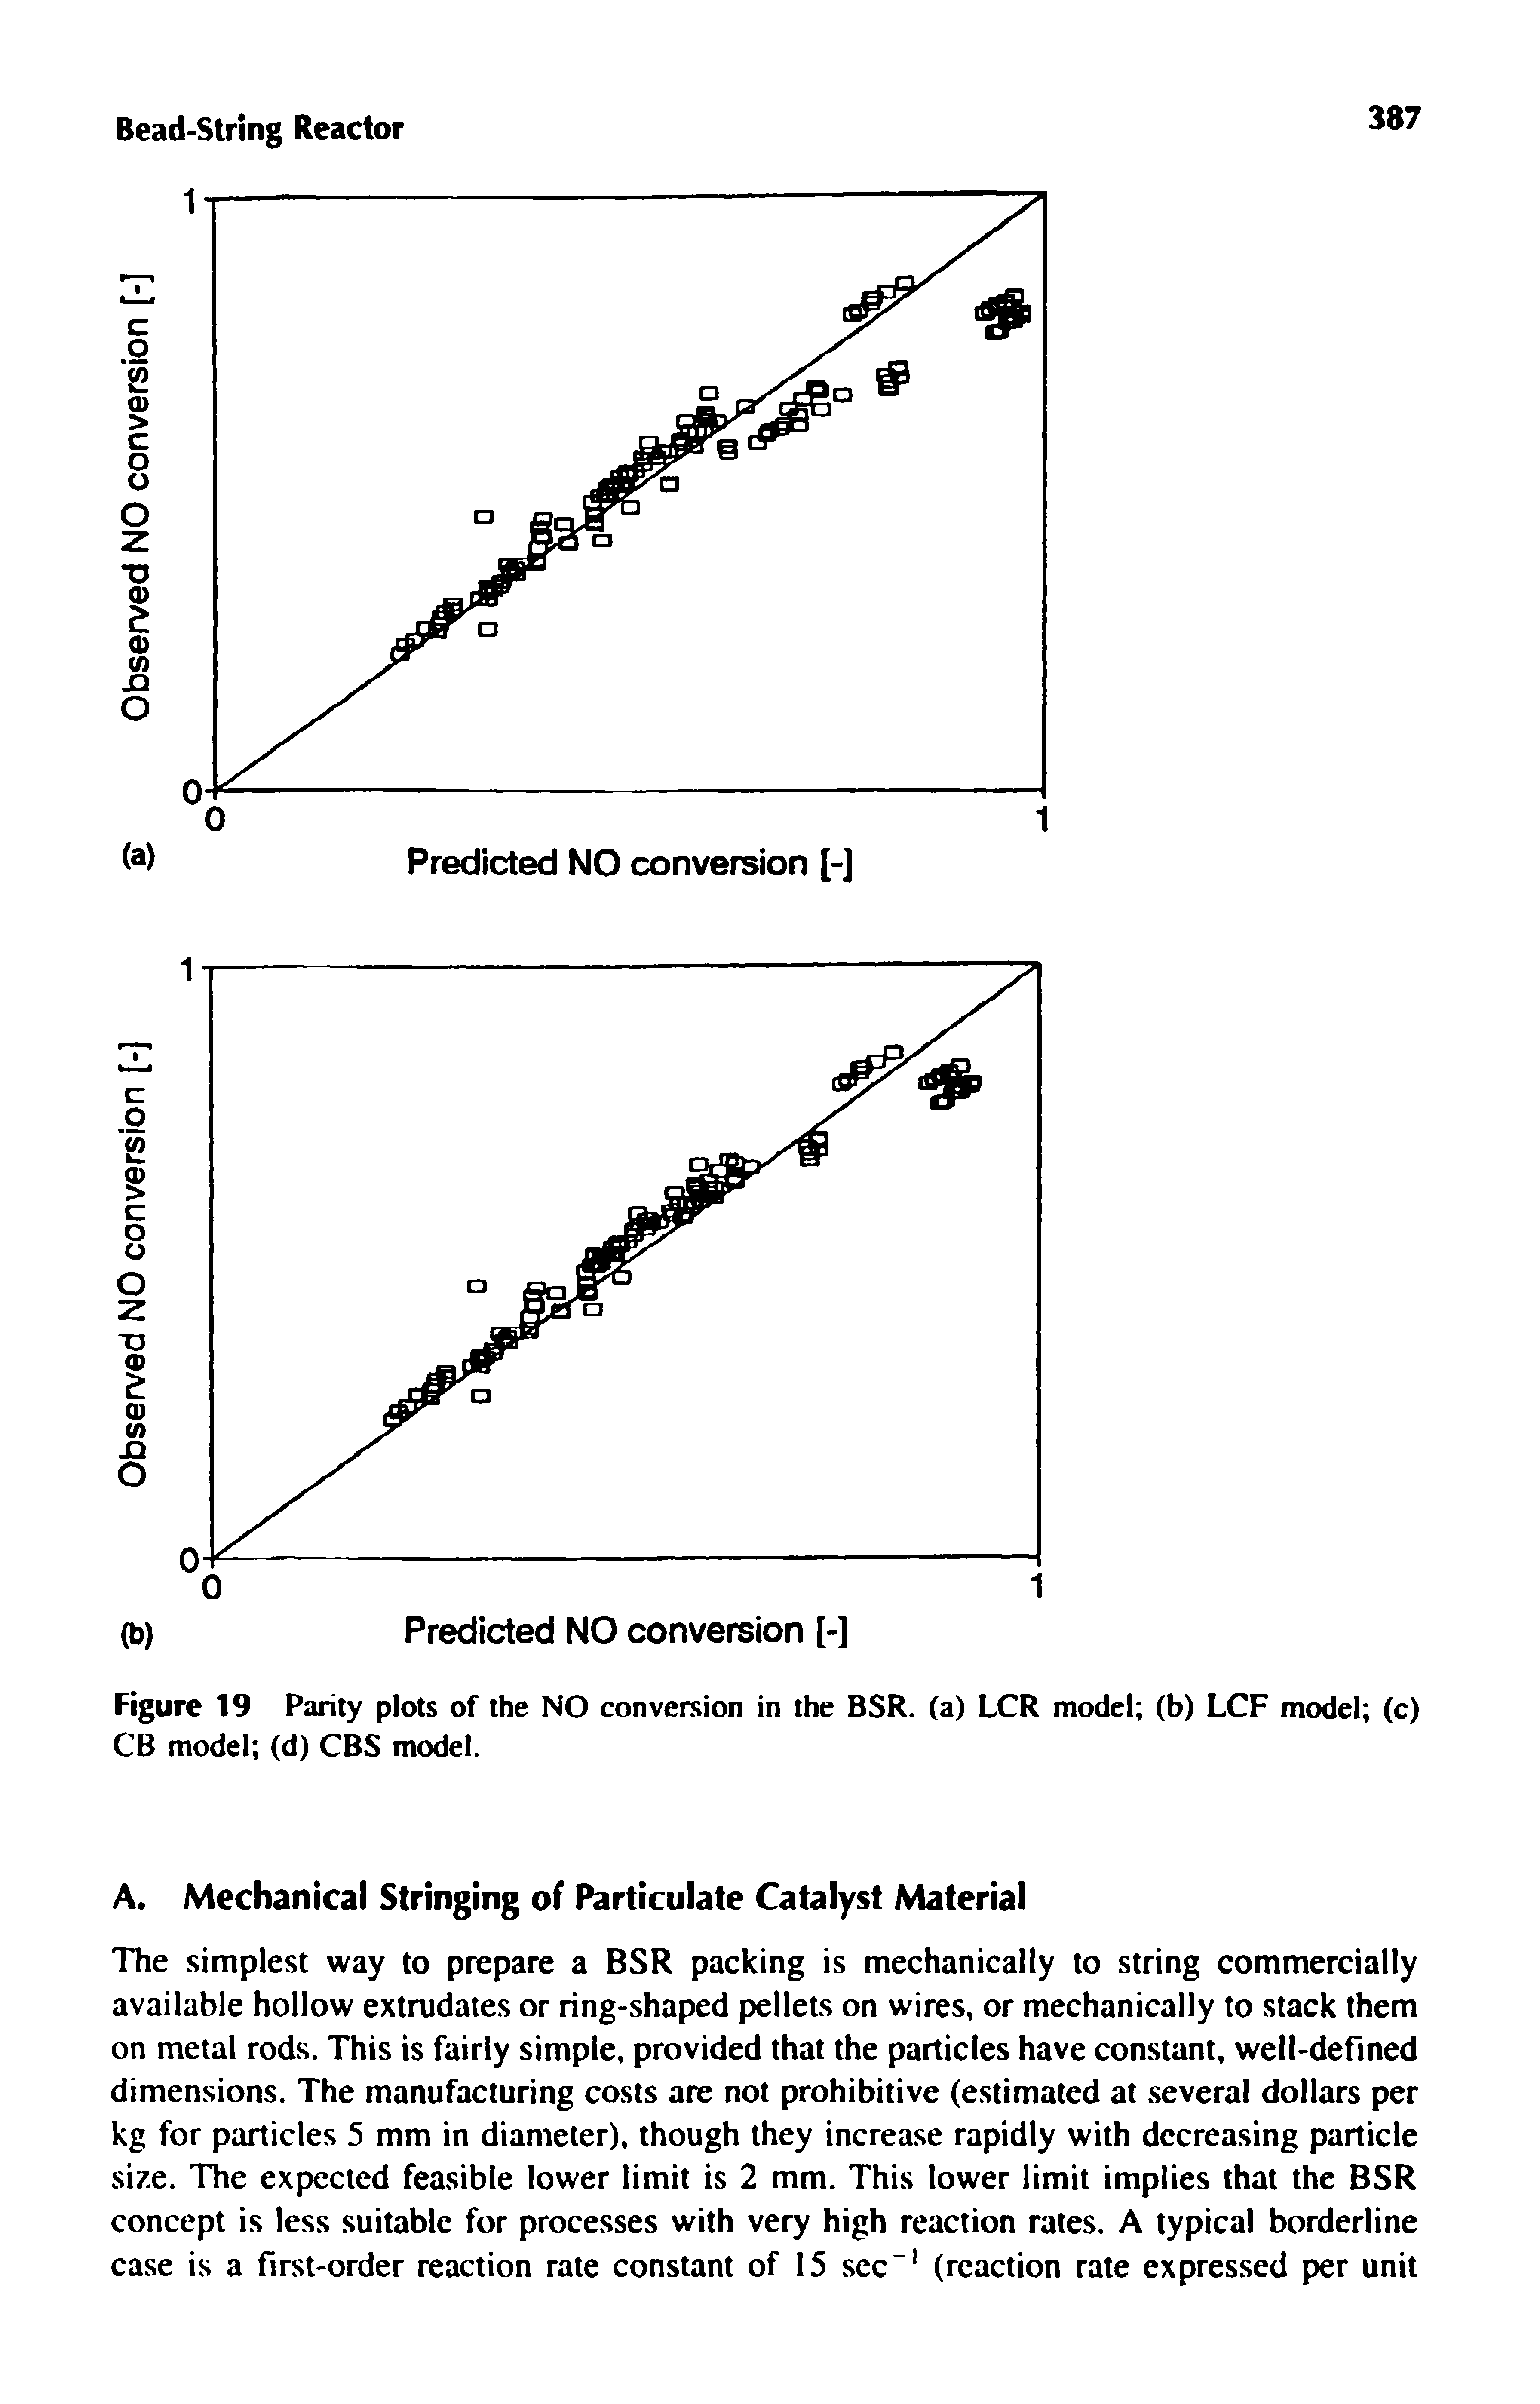 Figure 19 Parity plots of the NO conversion in the BSR. (a) LCR model (b) LCF model (c) CB model (d) CBS model.